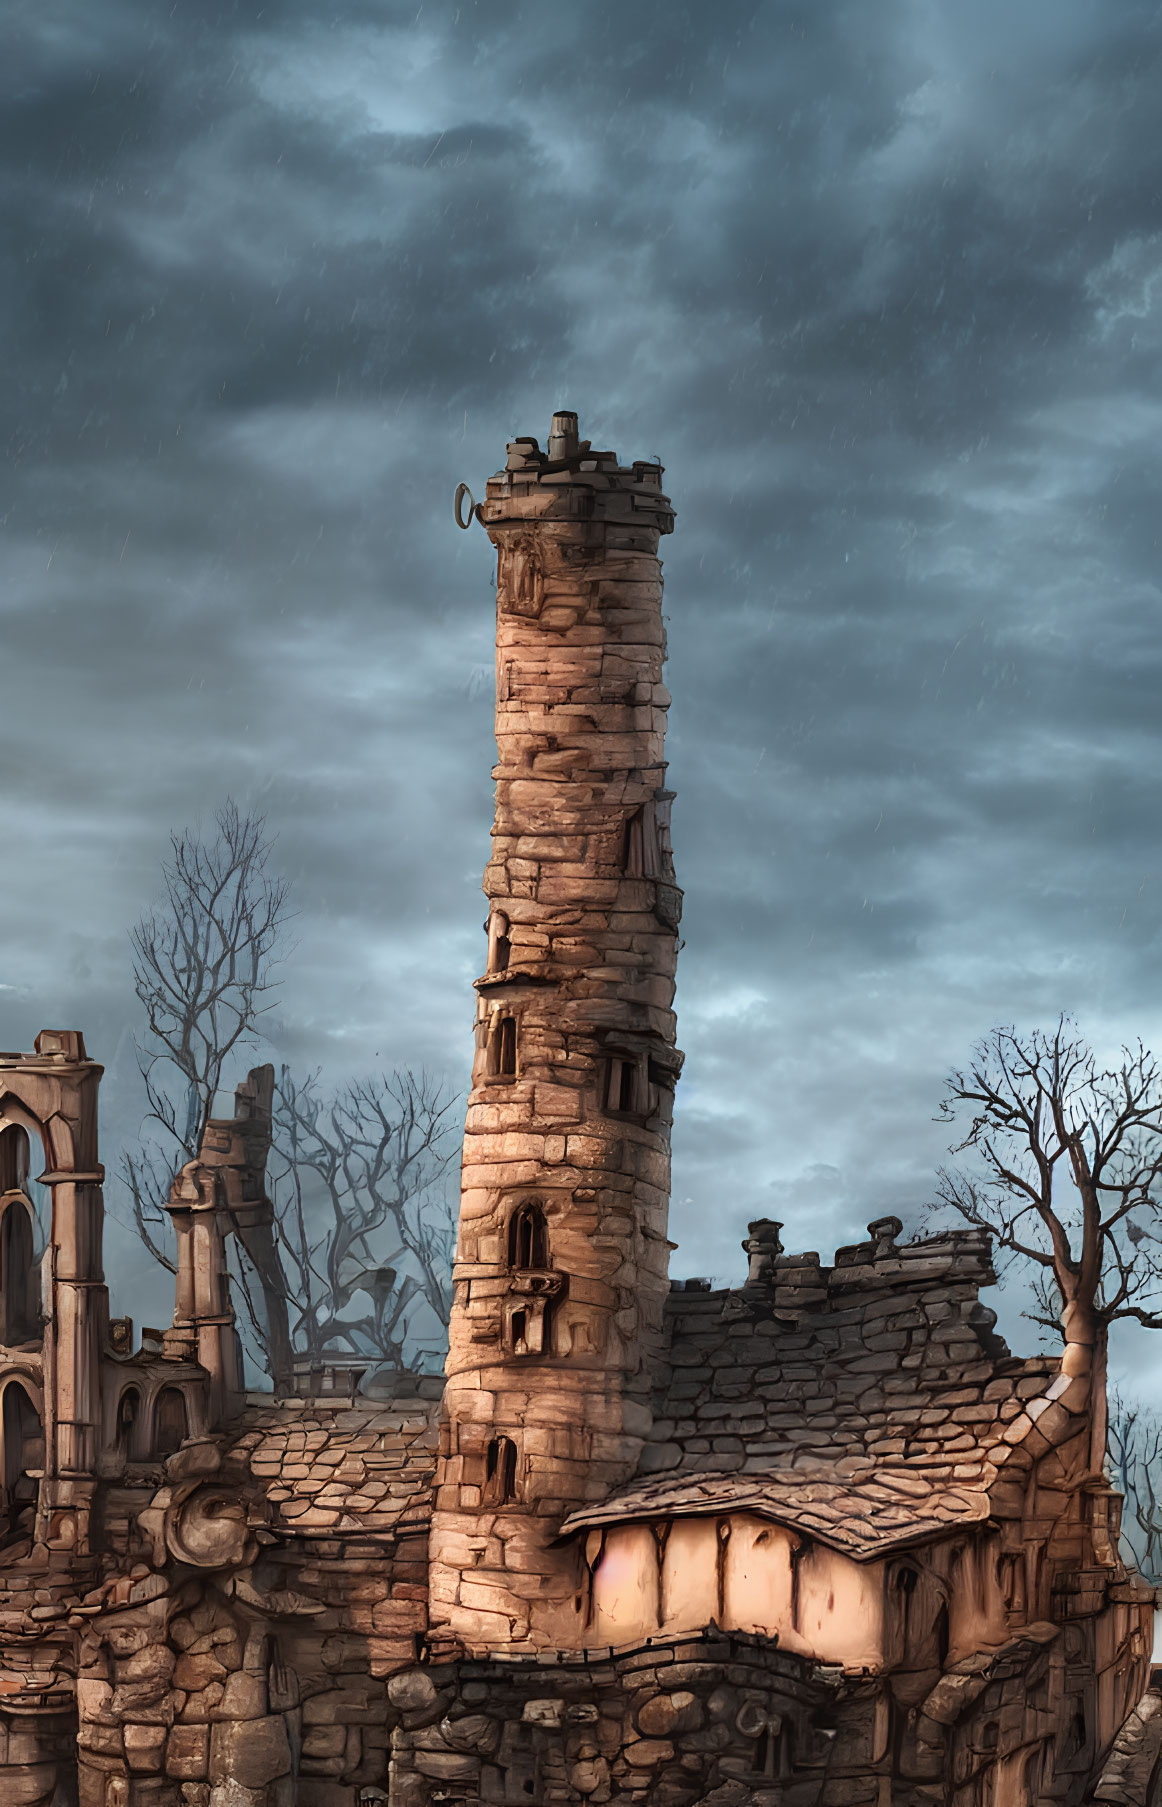 Abandoned stone tower in ruins under dark sky